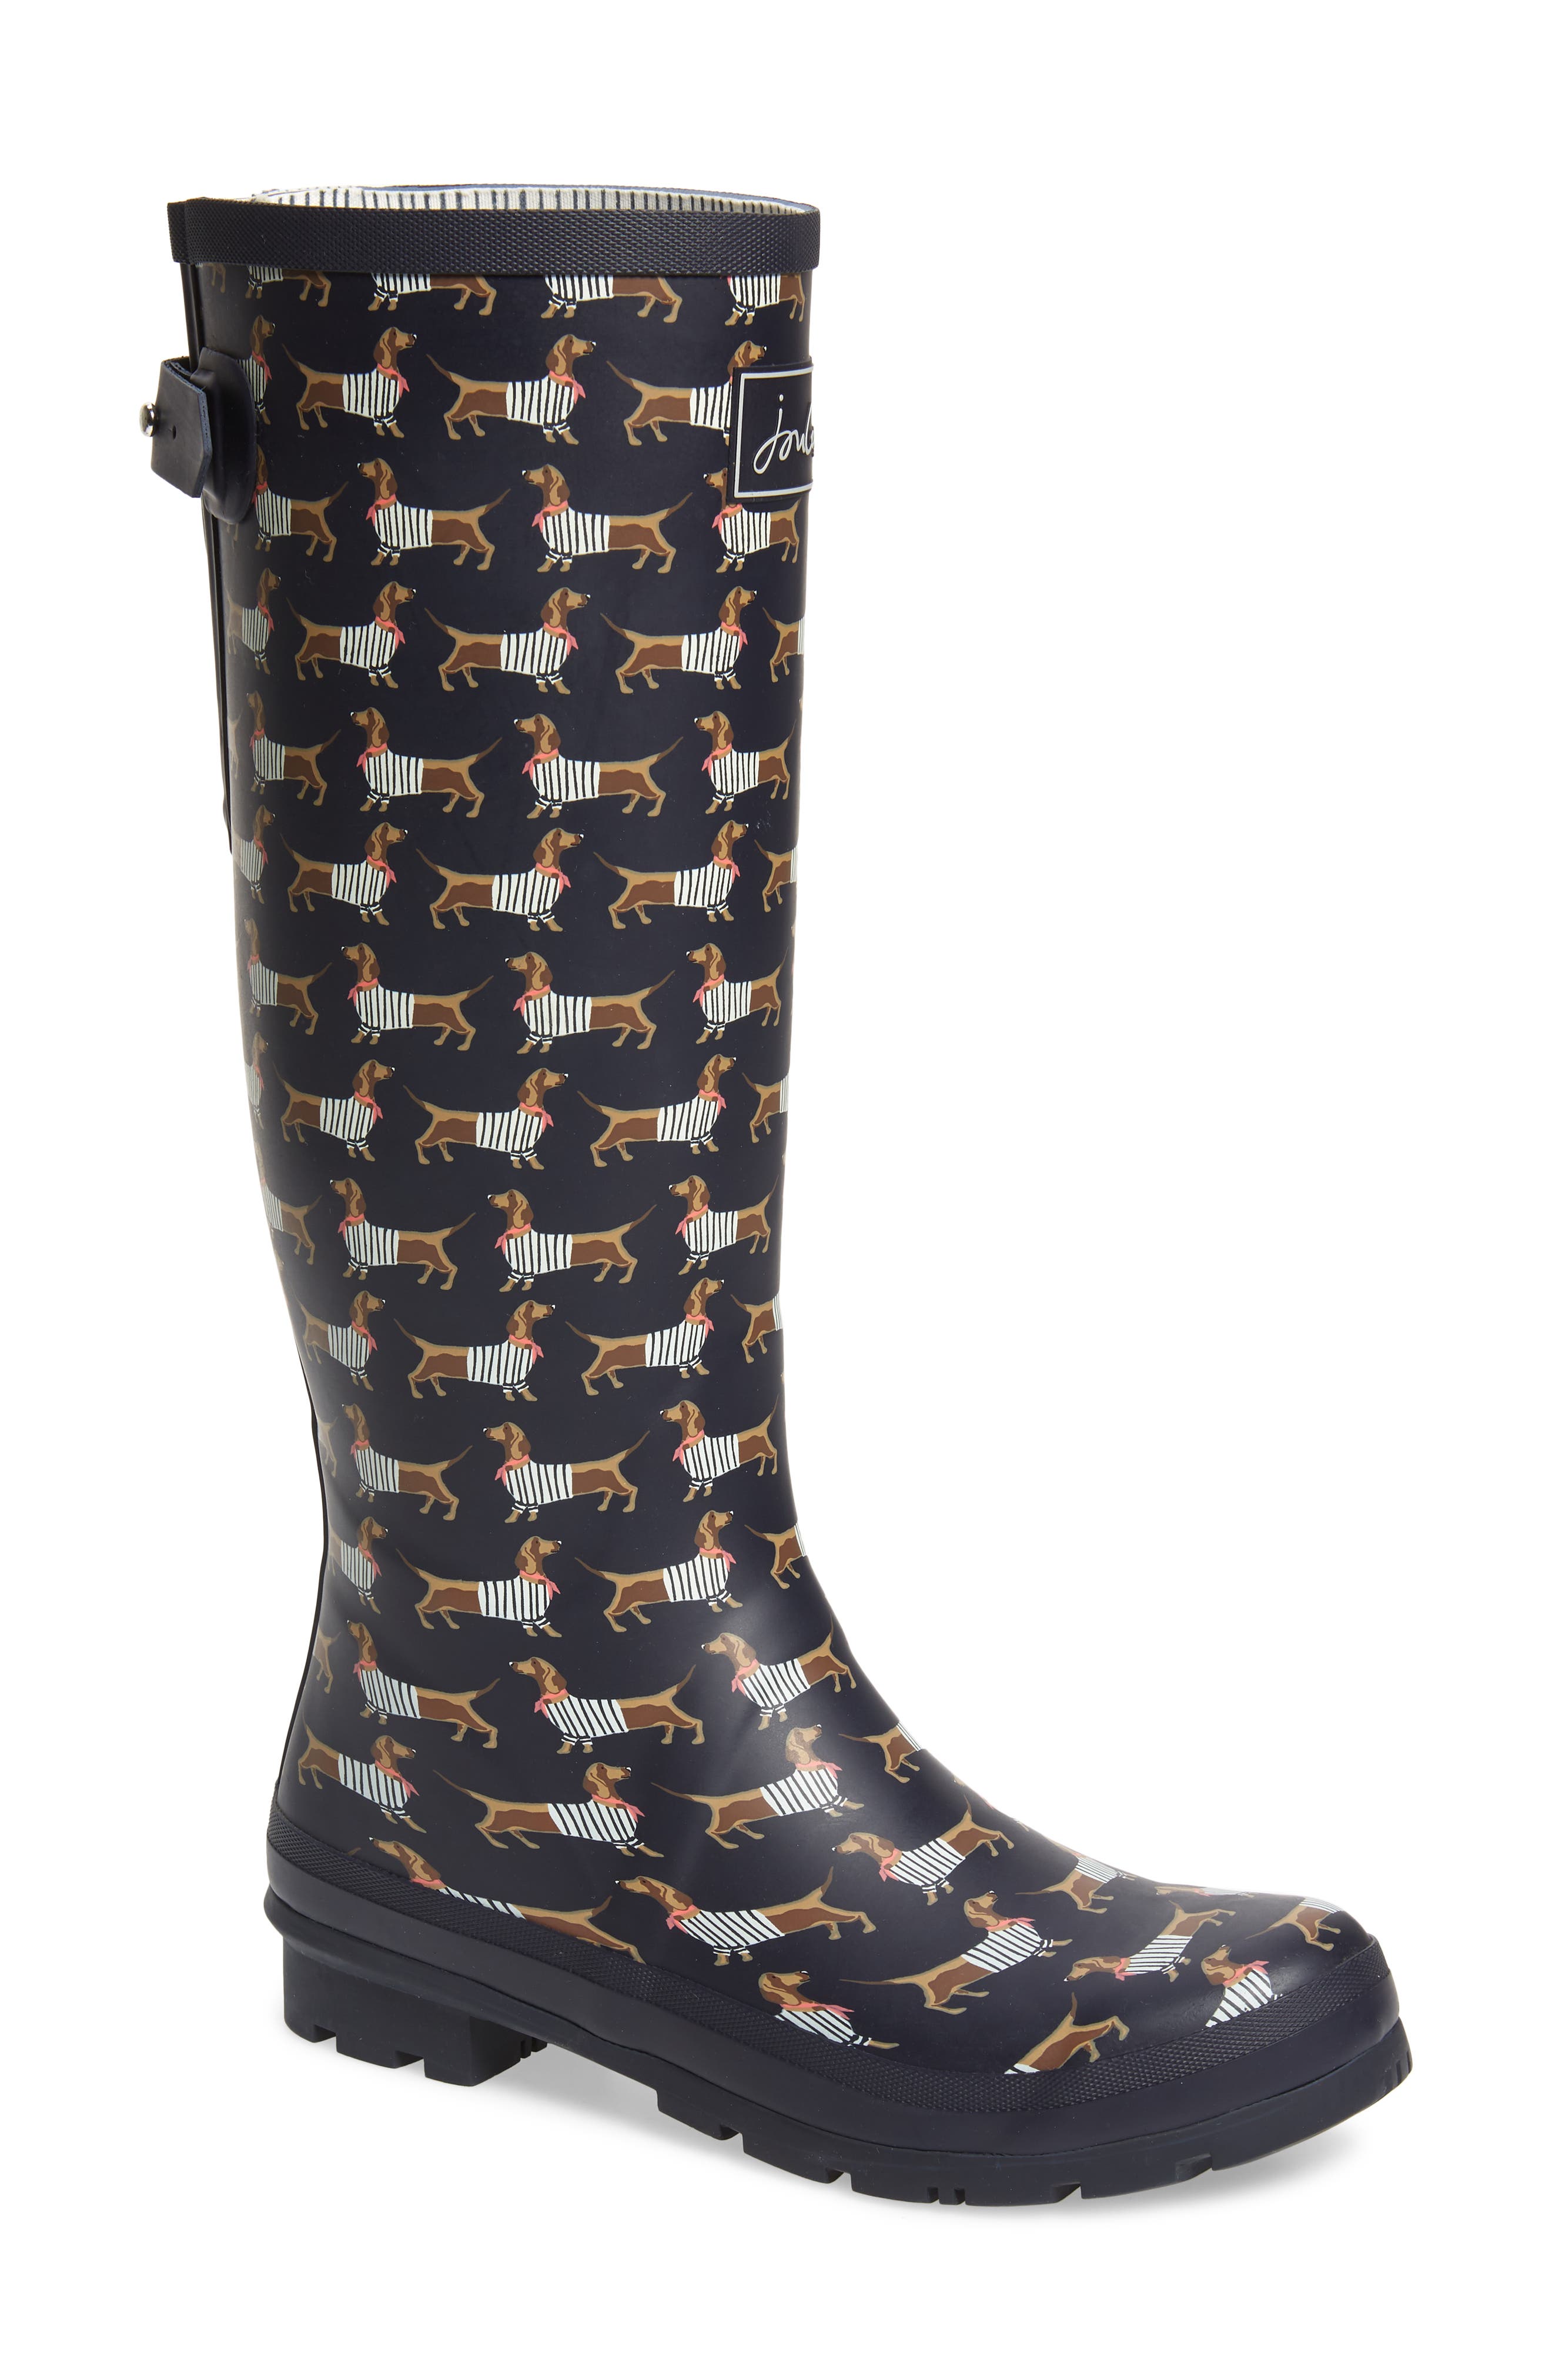 womens gray rain boots